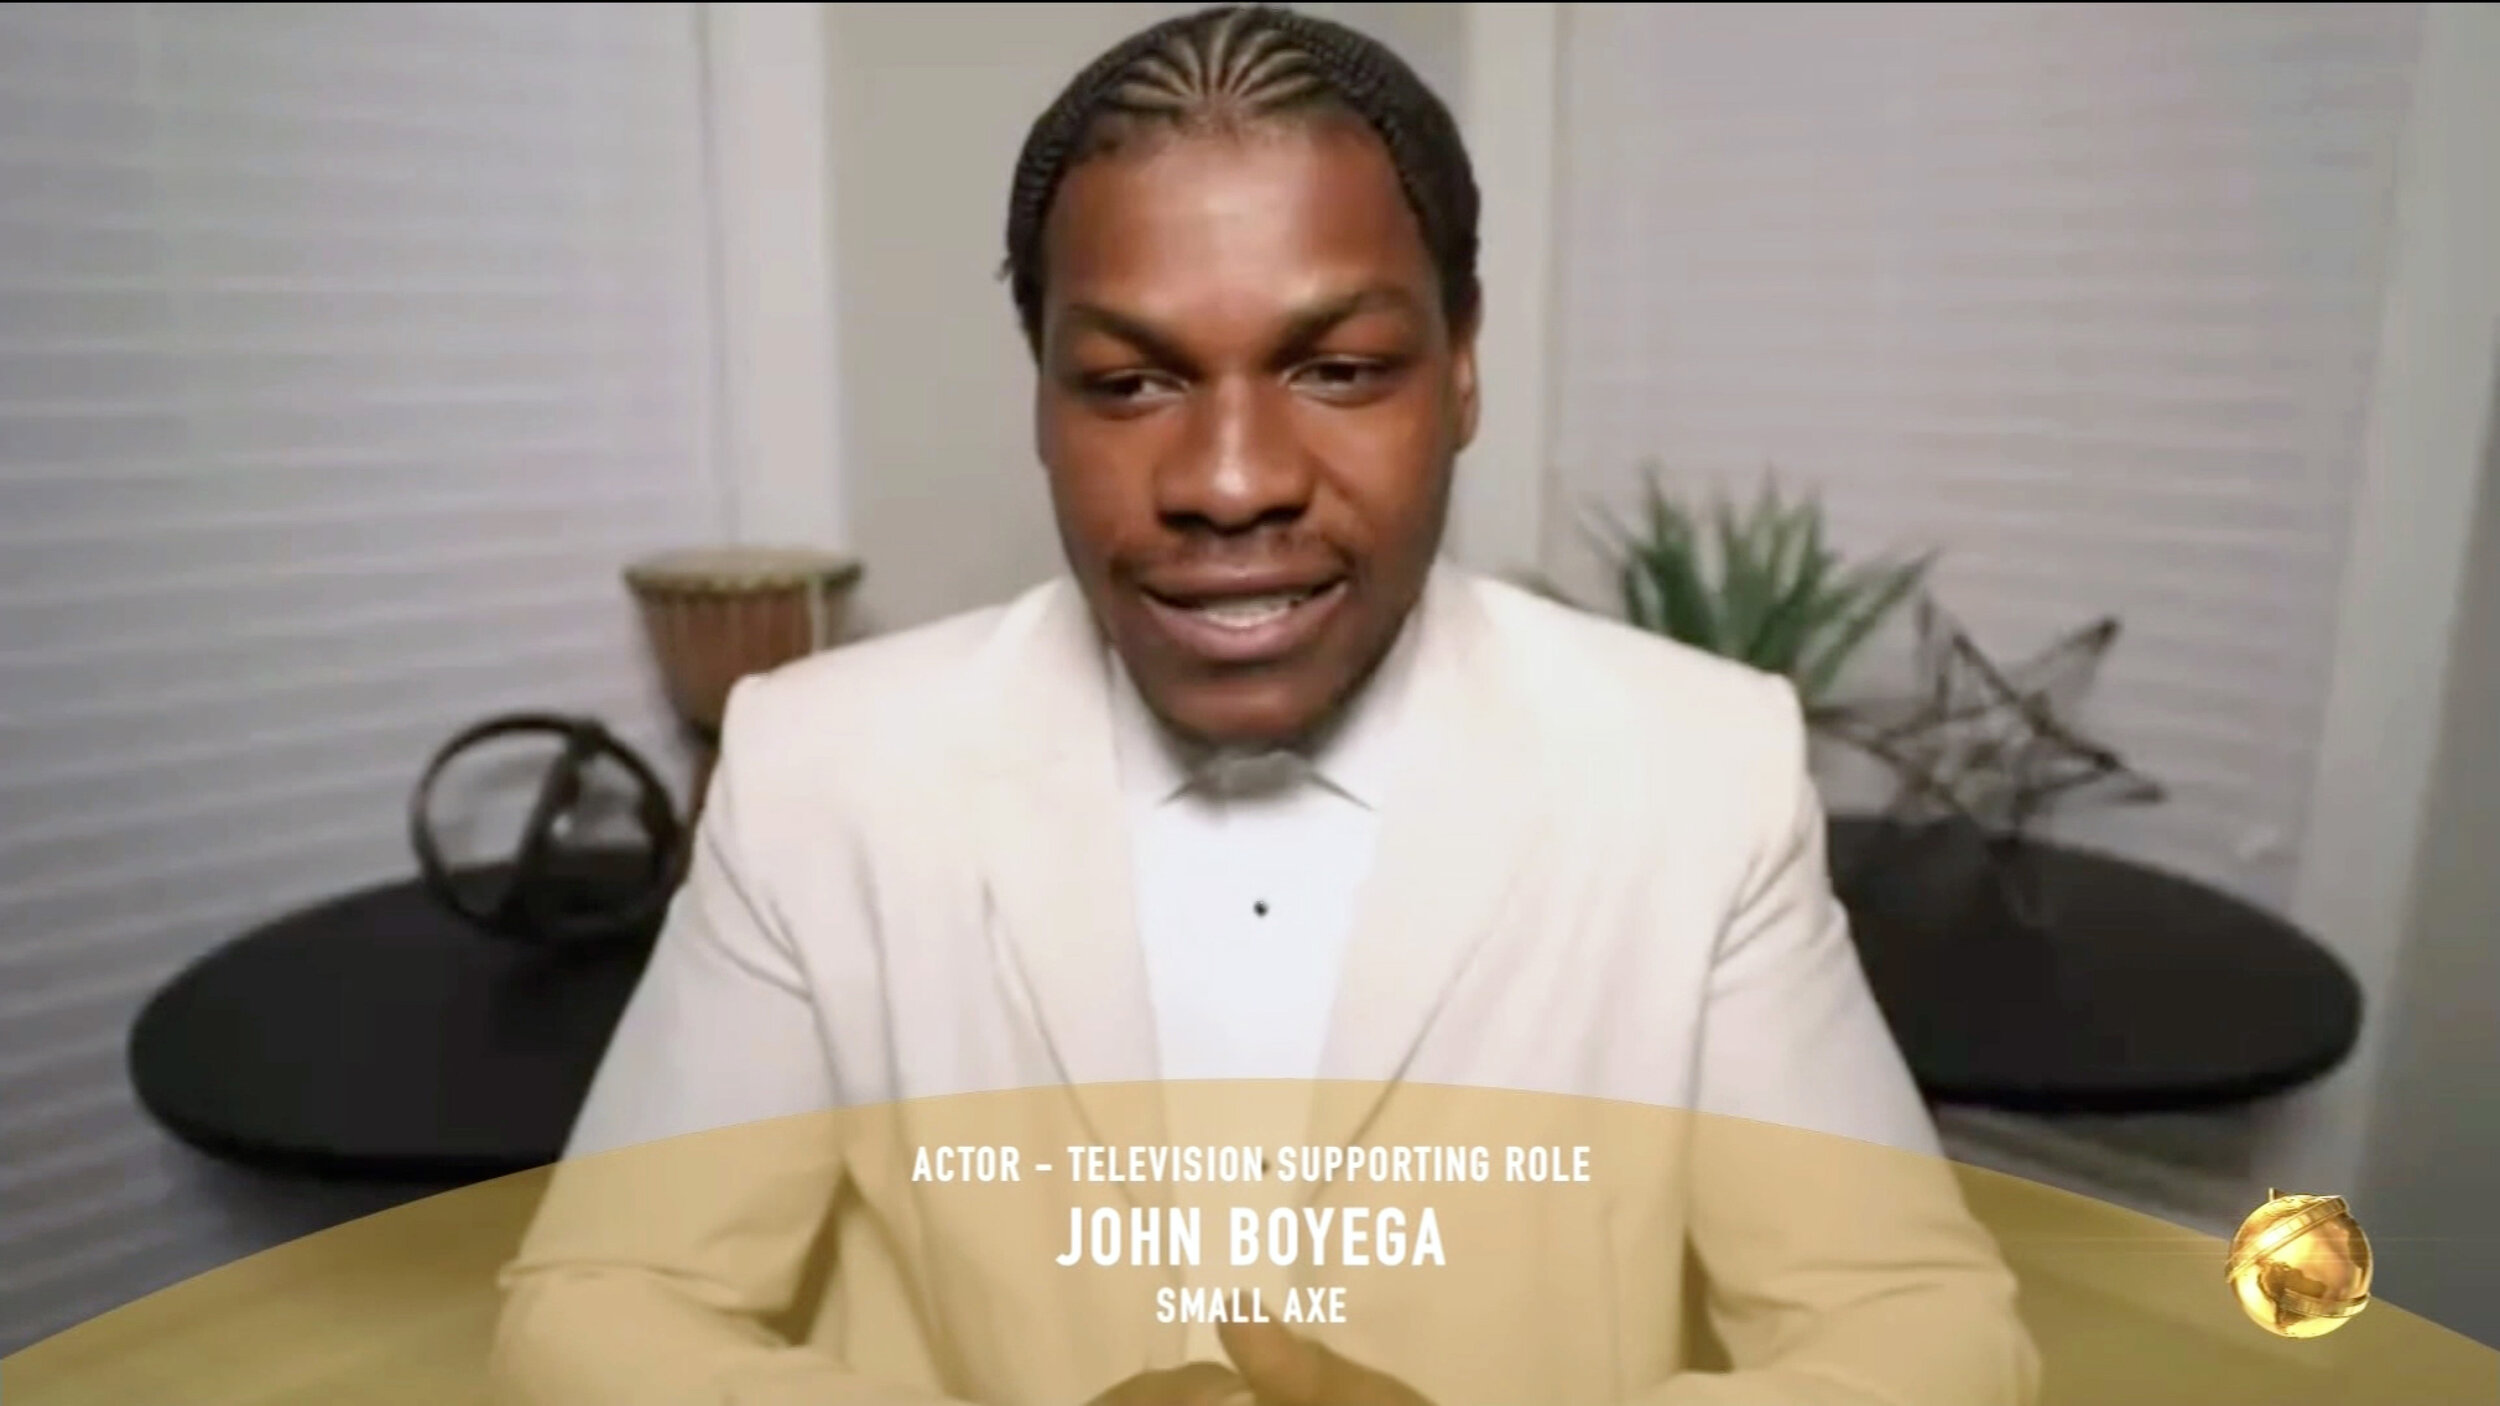 John Boyega in Givenchy.jpg